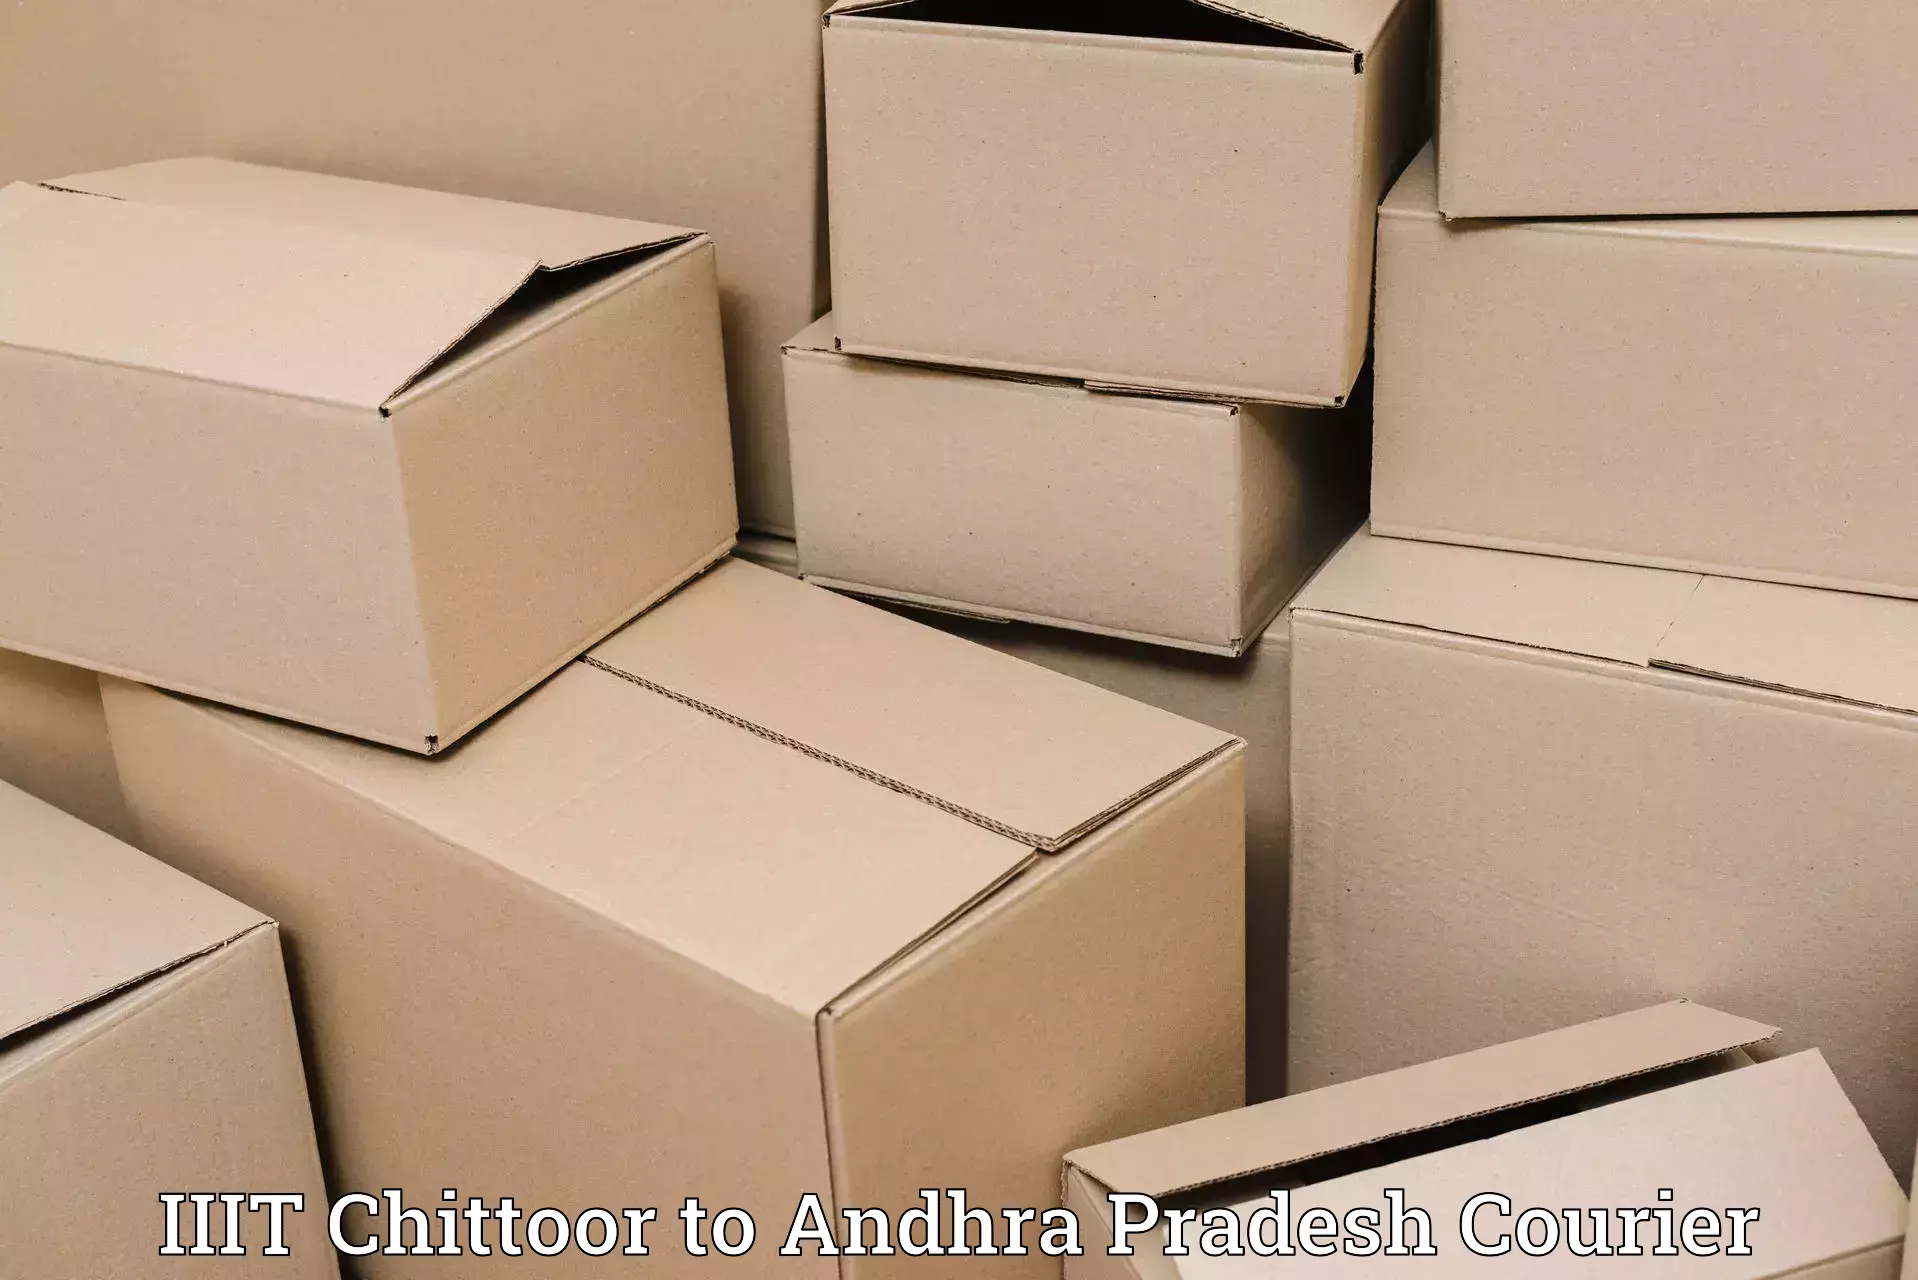 Enhanced delivery experience IIIT Chittoor to Koyyalgudem